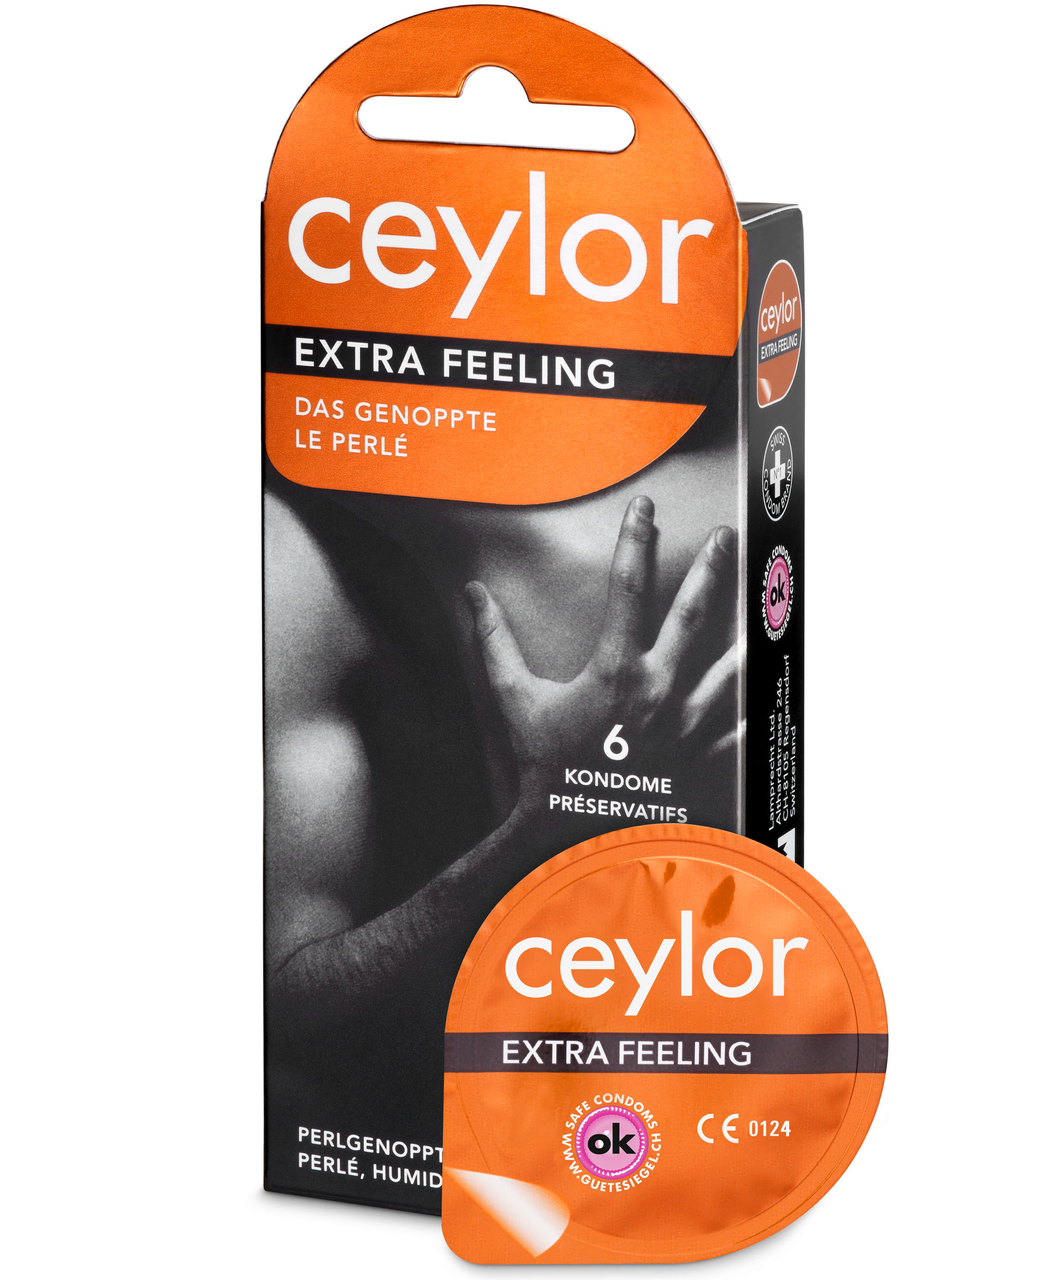 Ceylor Extra Feeling condoms (6 pcs)